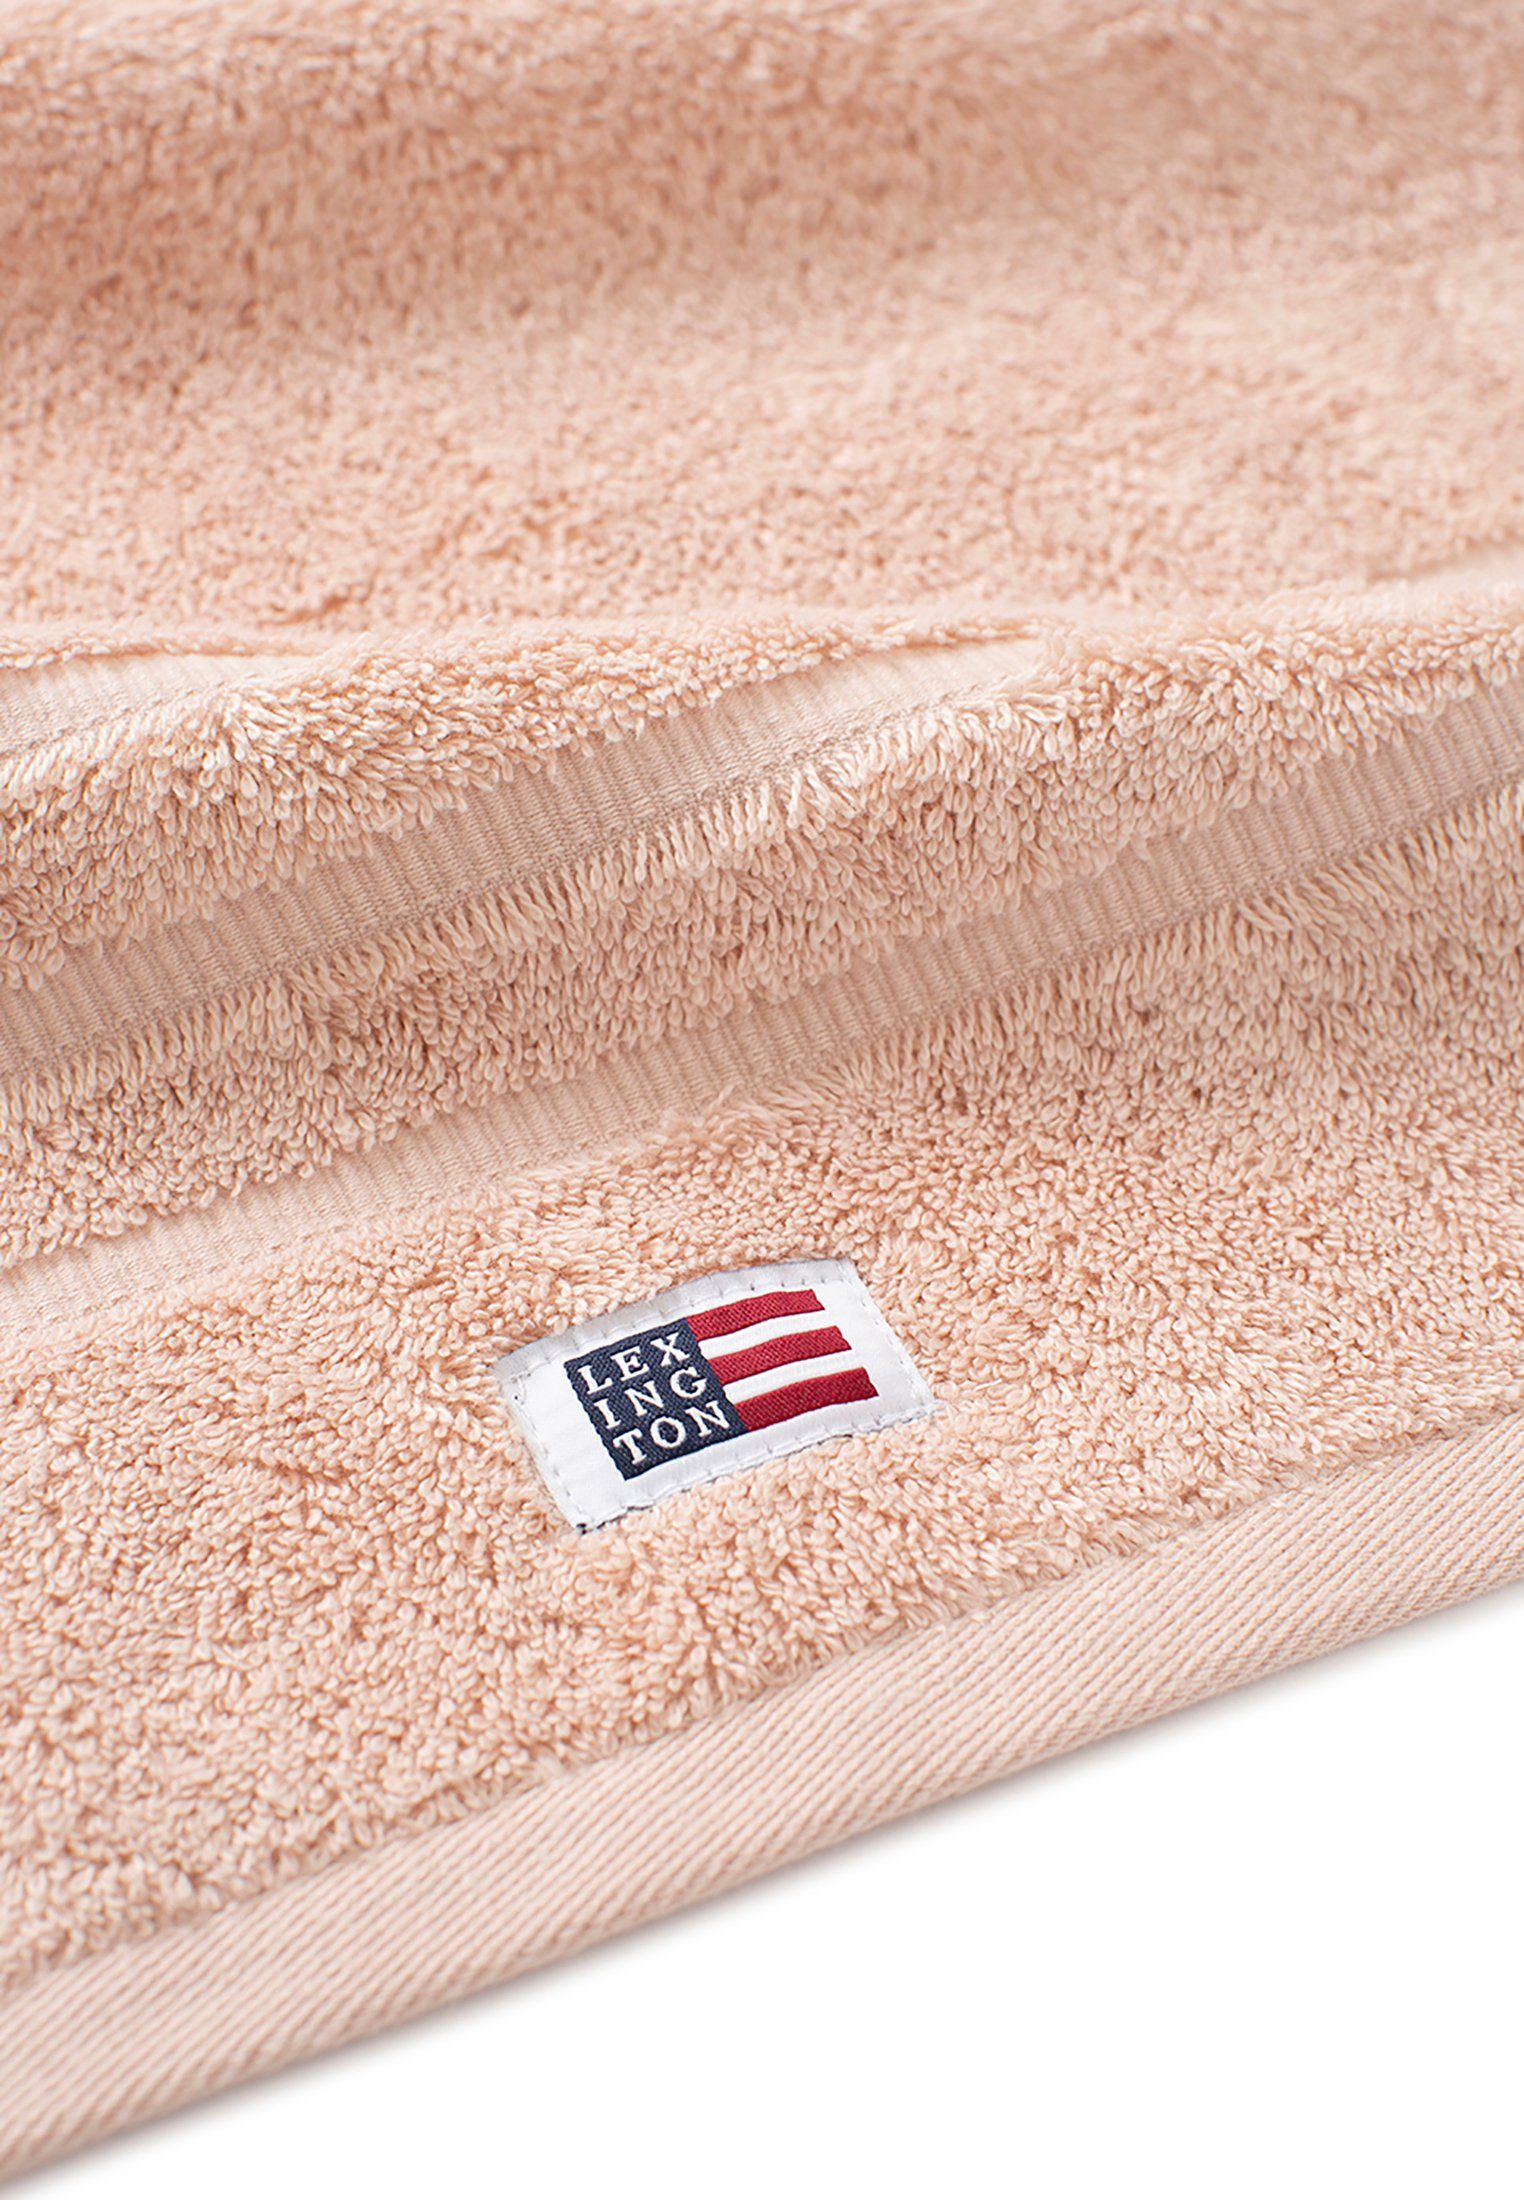 Handtuch dust Lexington rose Towel Original